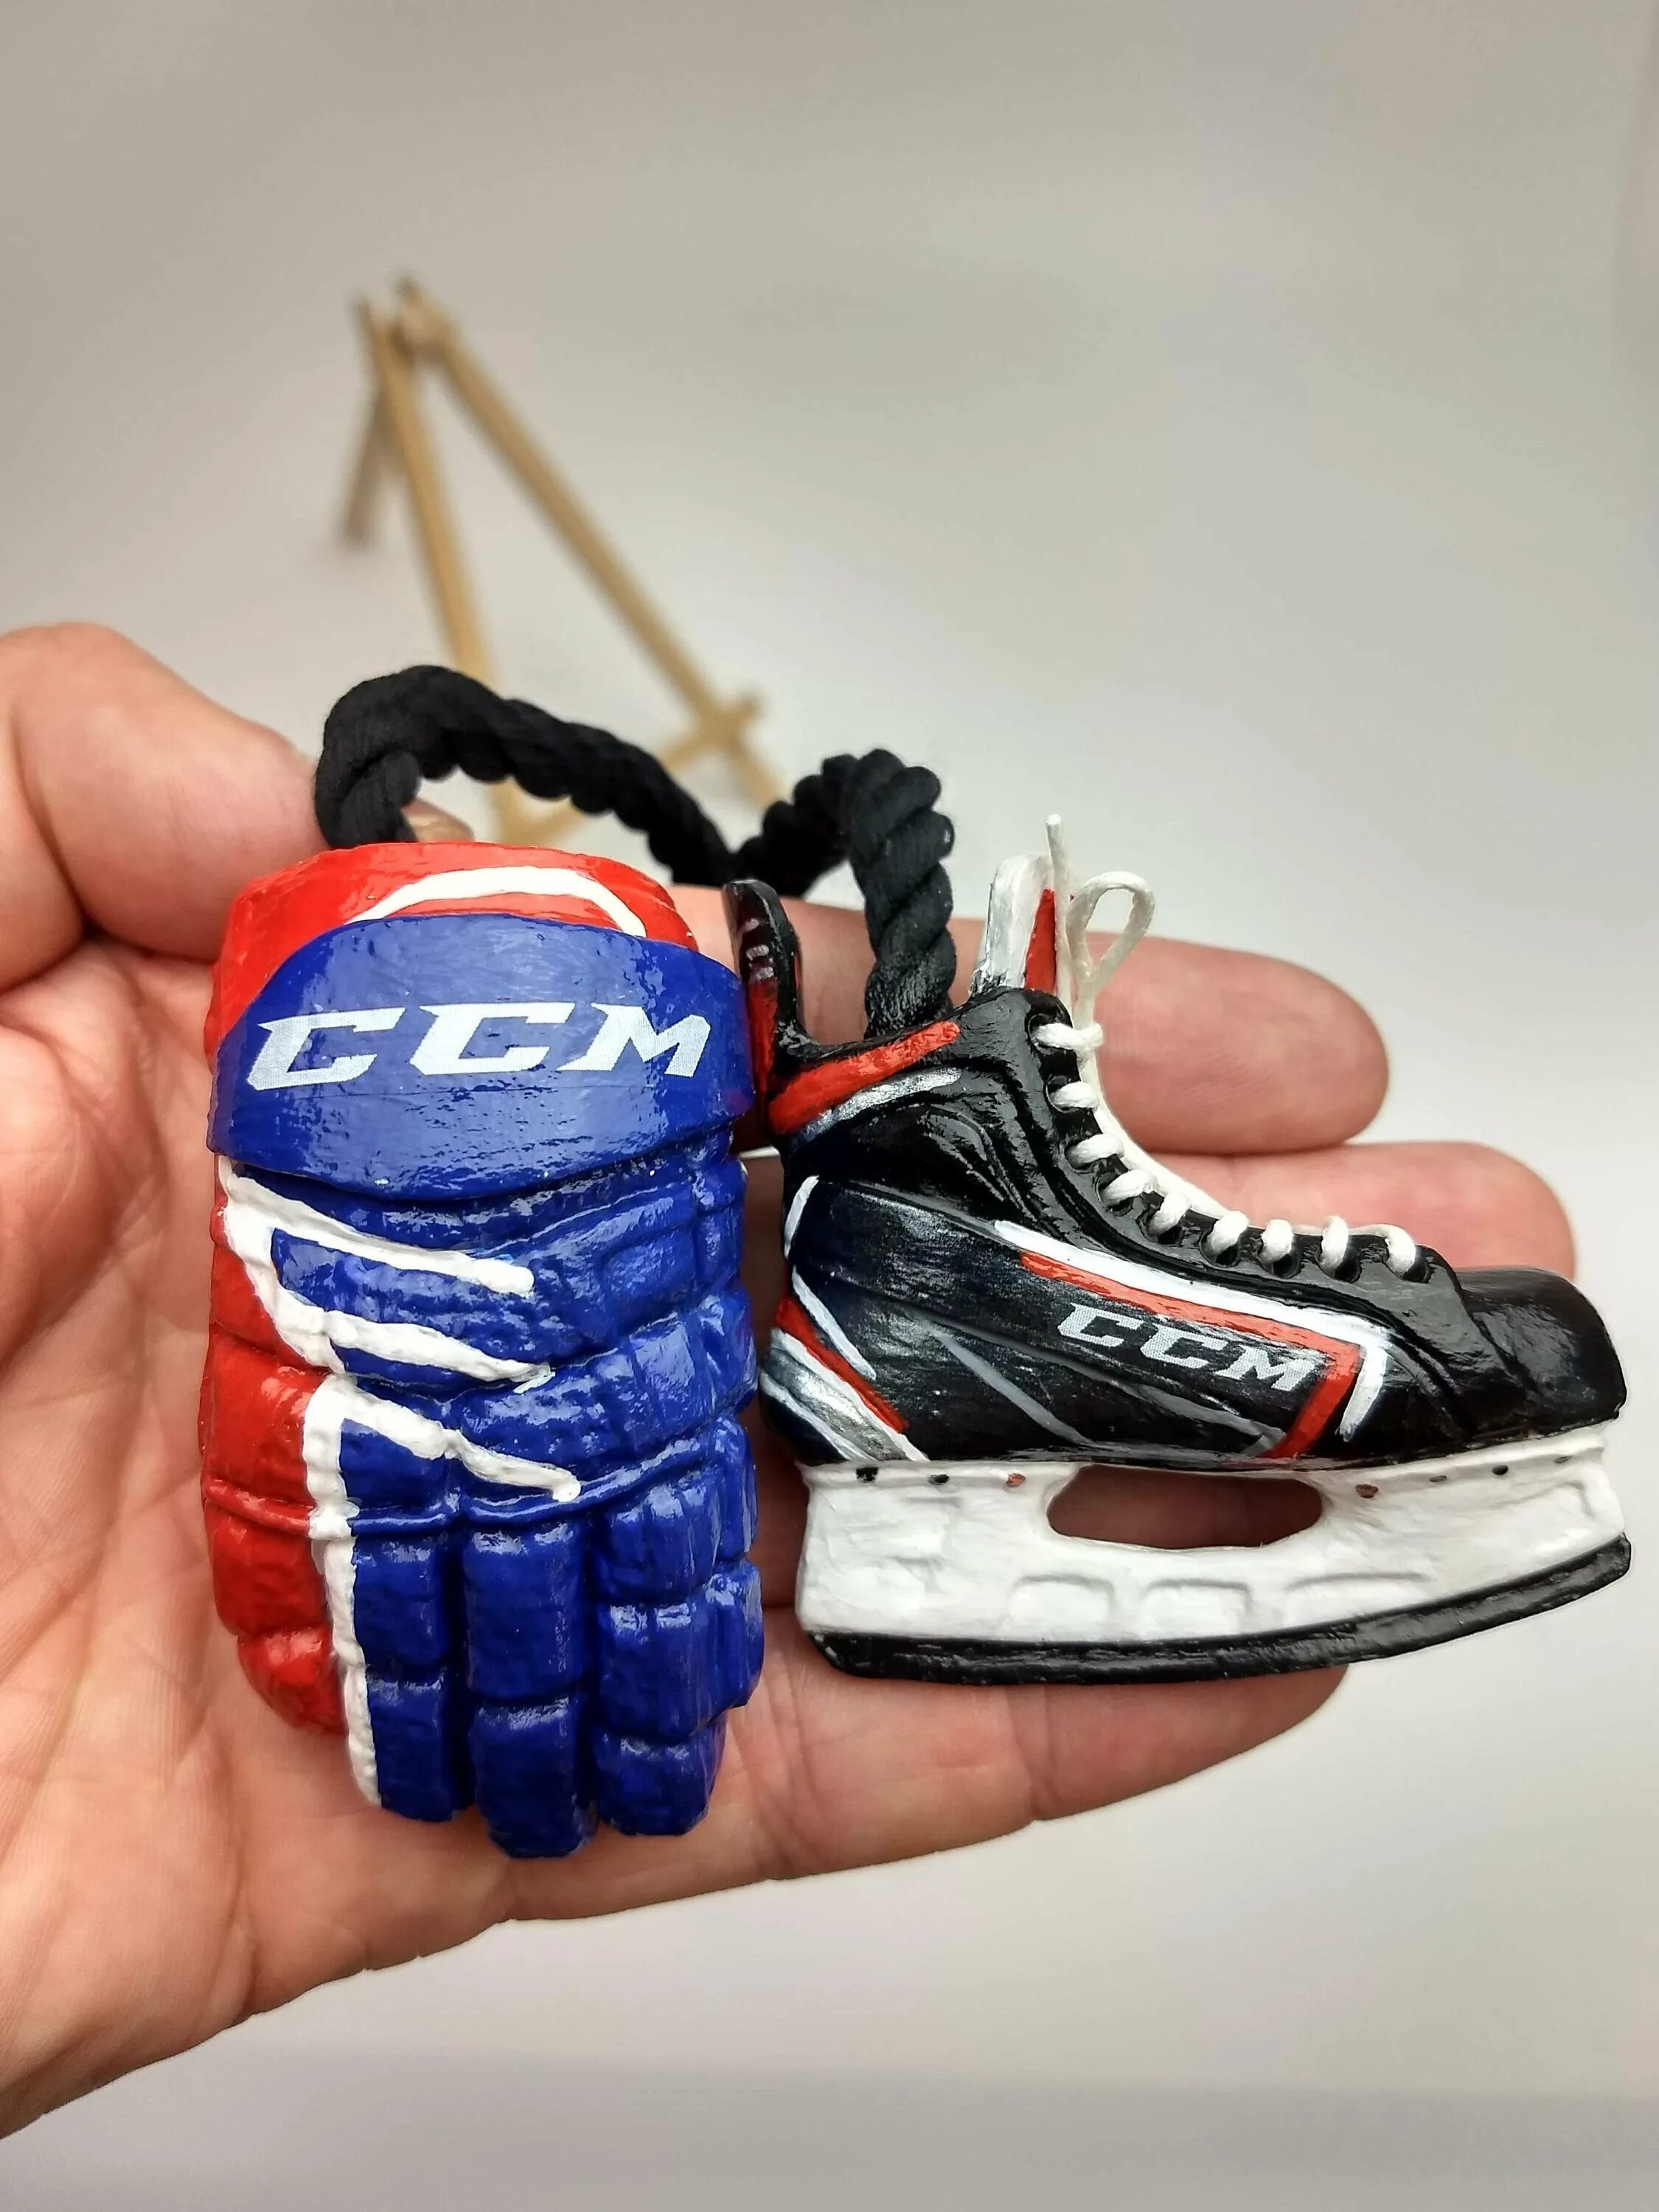 Подарок хоккеисту. Сувенир для хоккеиста. Сувенирные коньки. Подарок на хоккейную тематику.